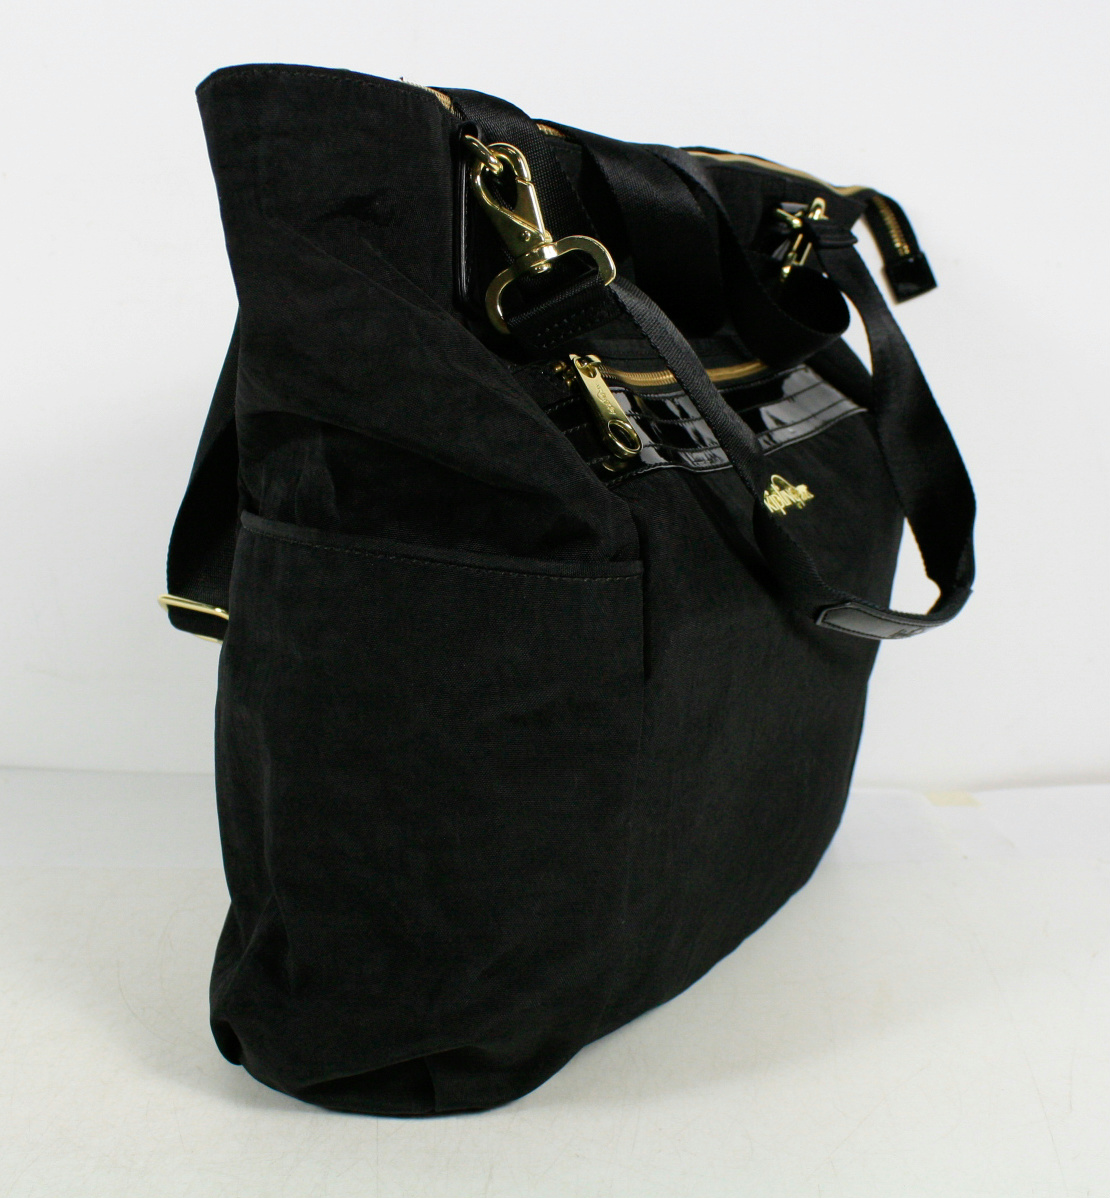 Kipling Black Zipper Large Tote Bag